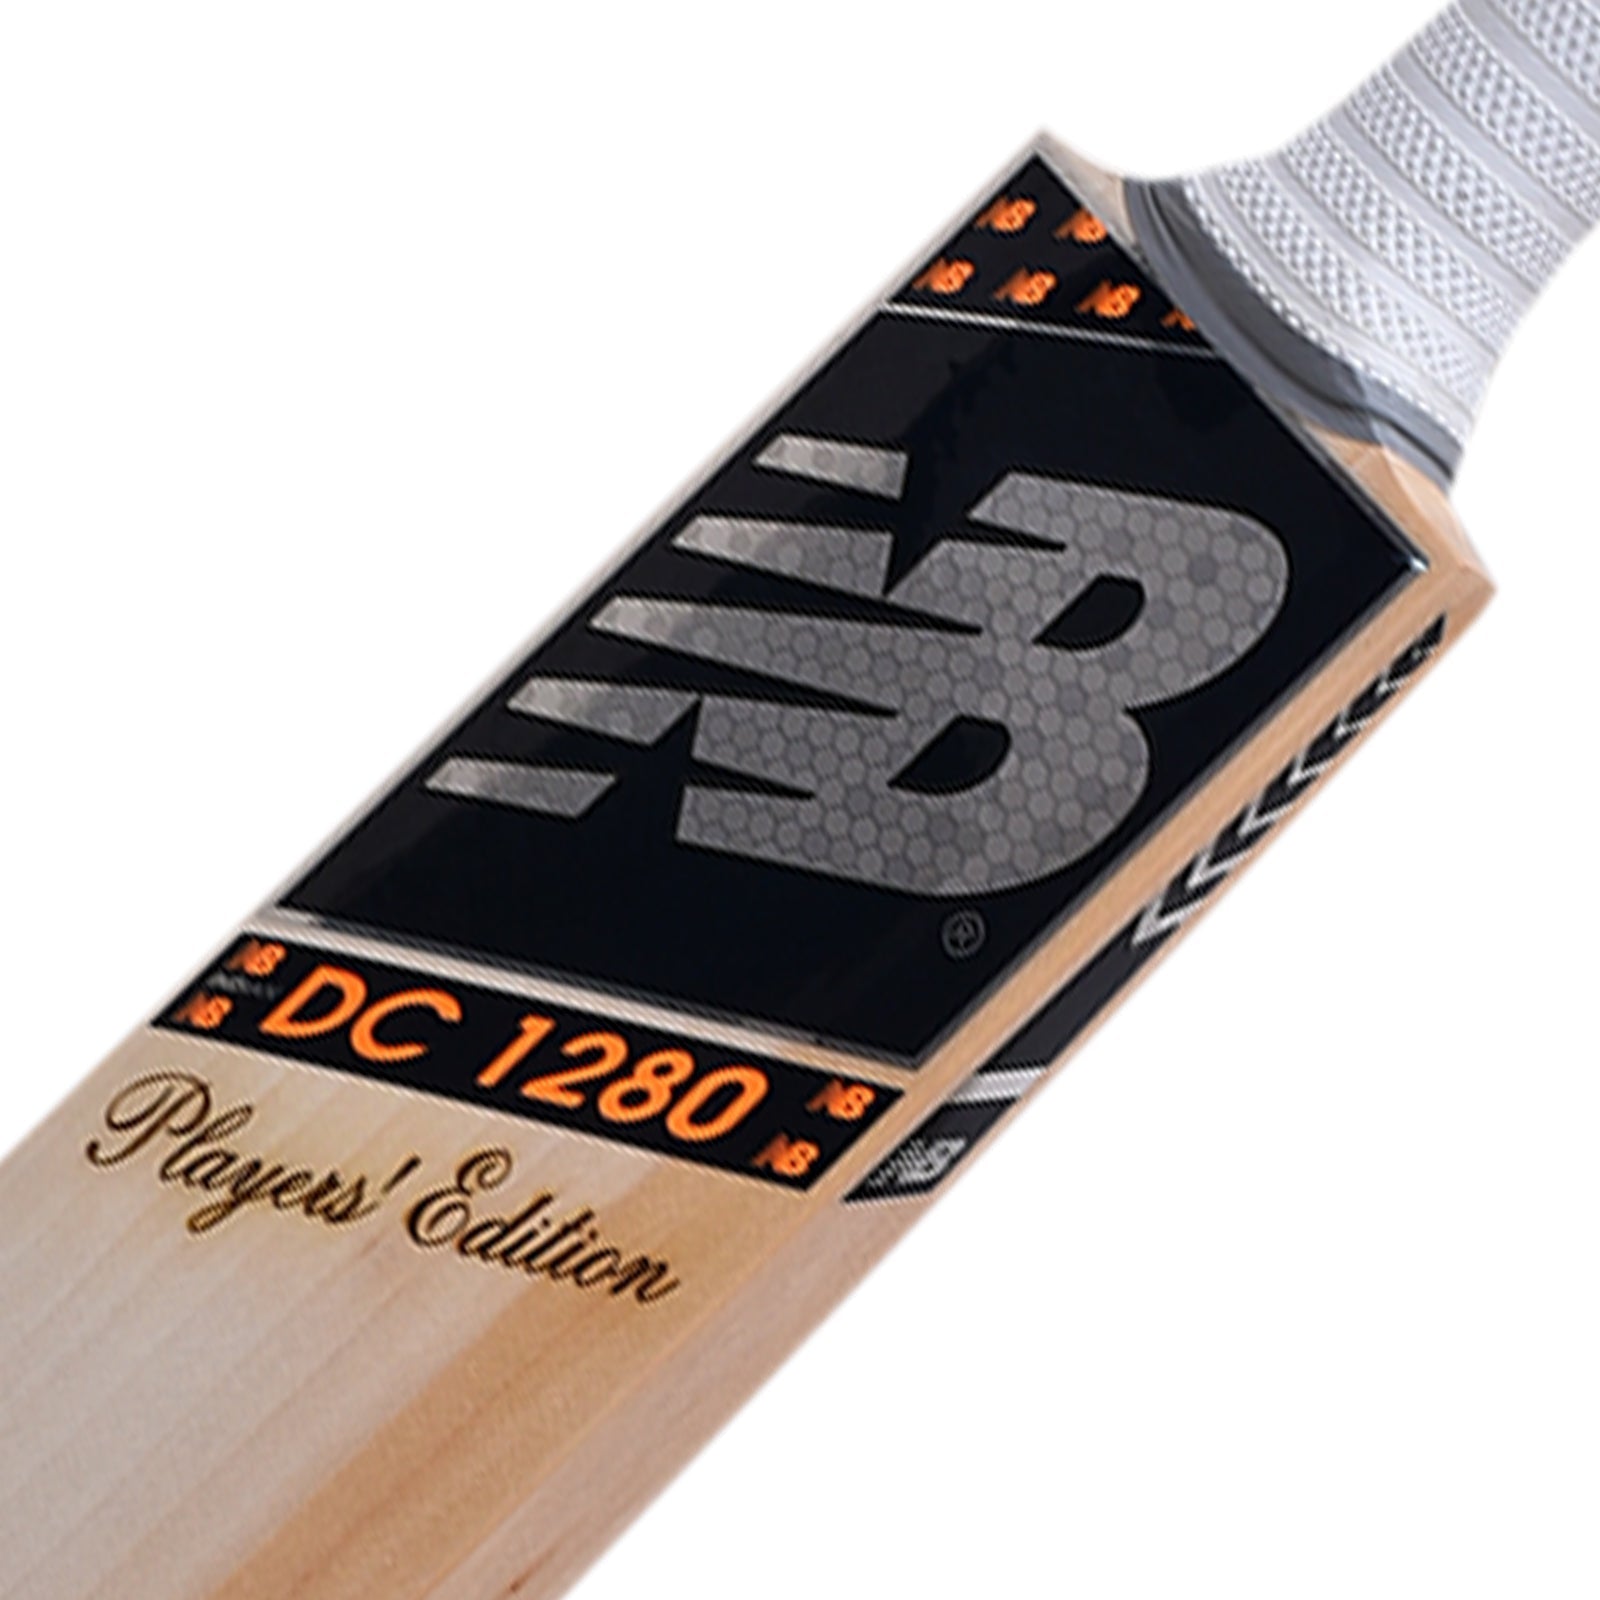 New Balance DC 1280 Cricket Kit Bag - Duffle - Medium (2021/22) – WHACK  Sports